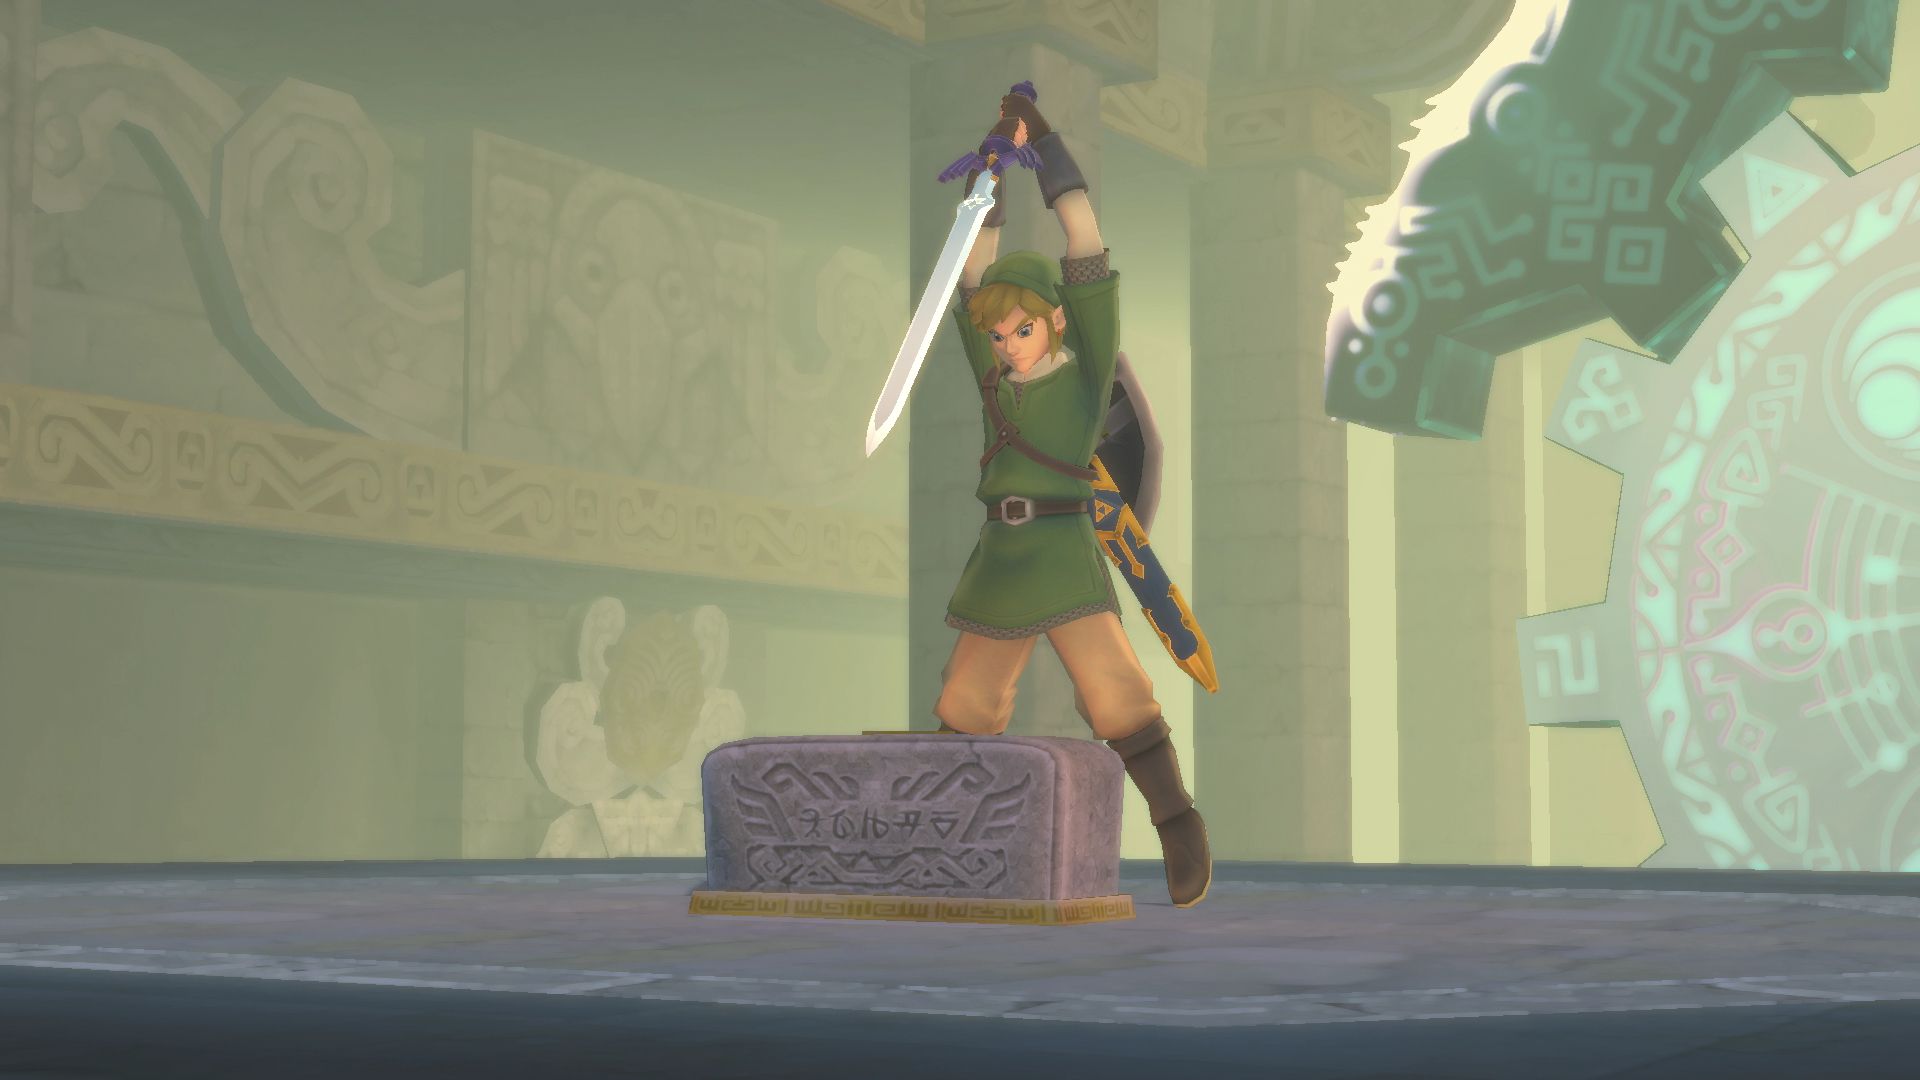 Screenshot of an elf-like figure lifting a sword